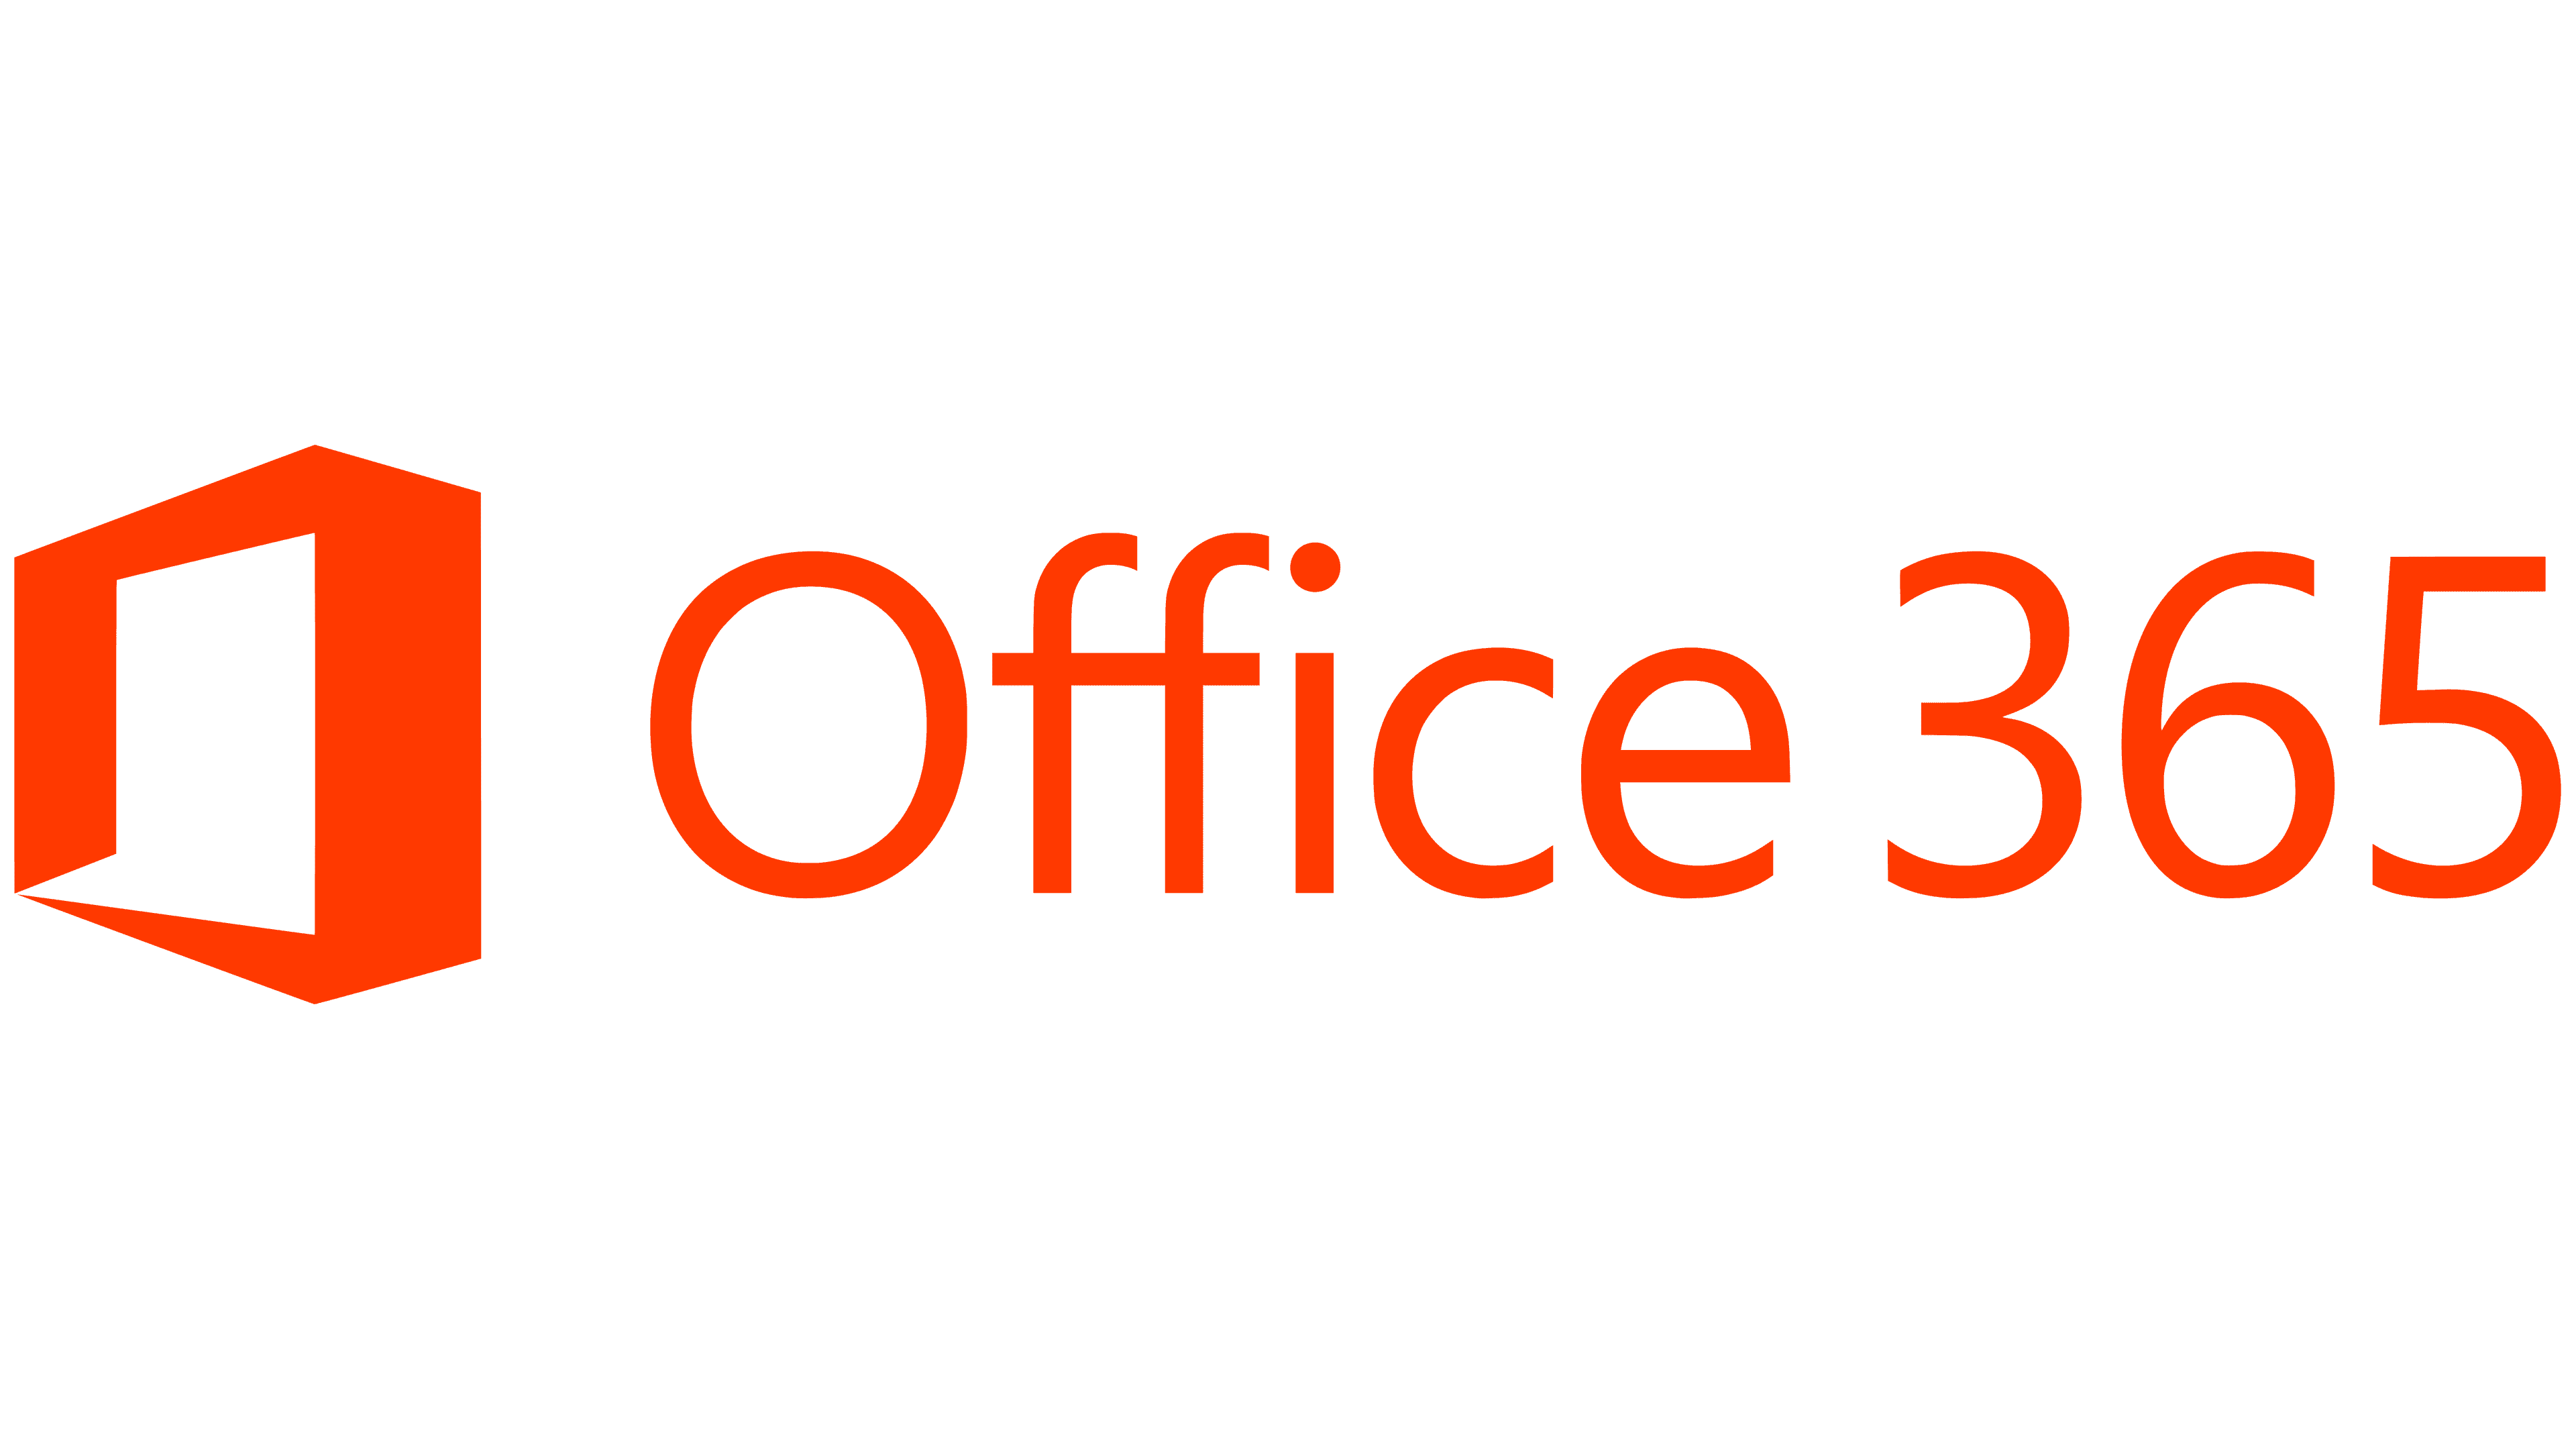 resly office365 integration